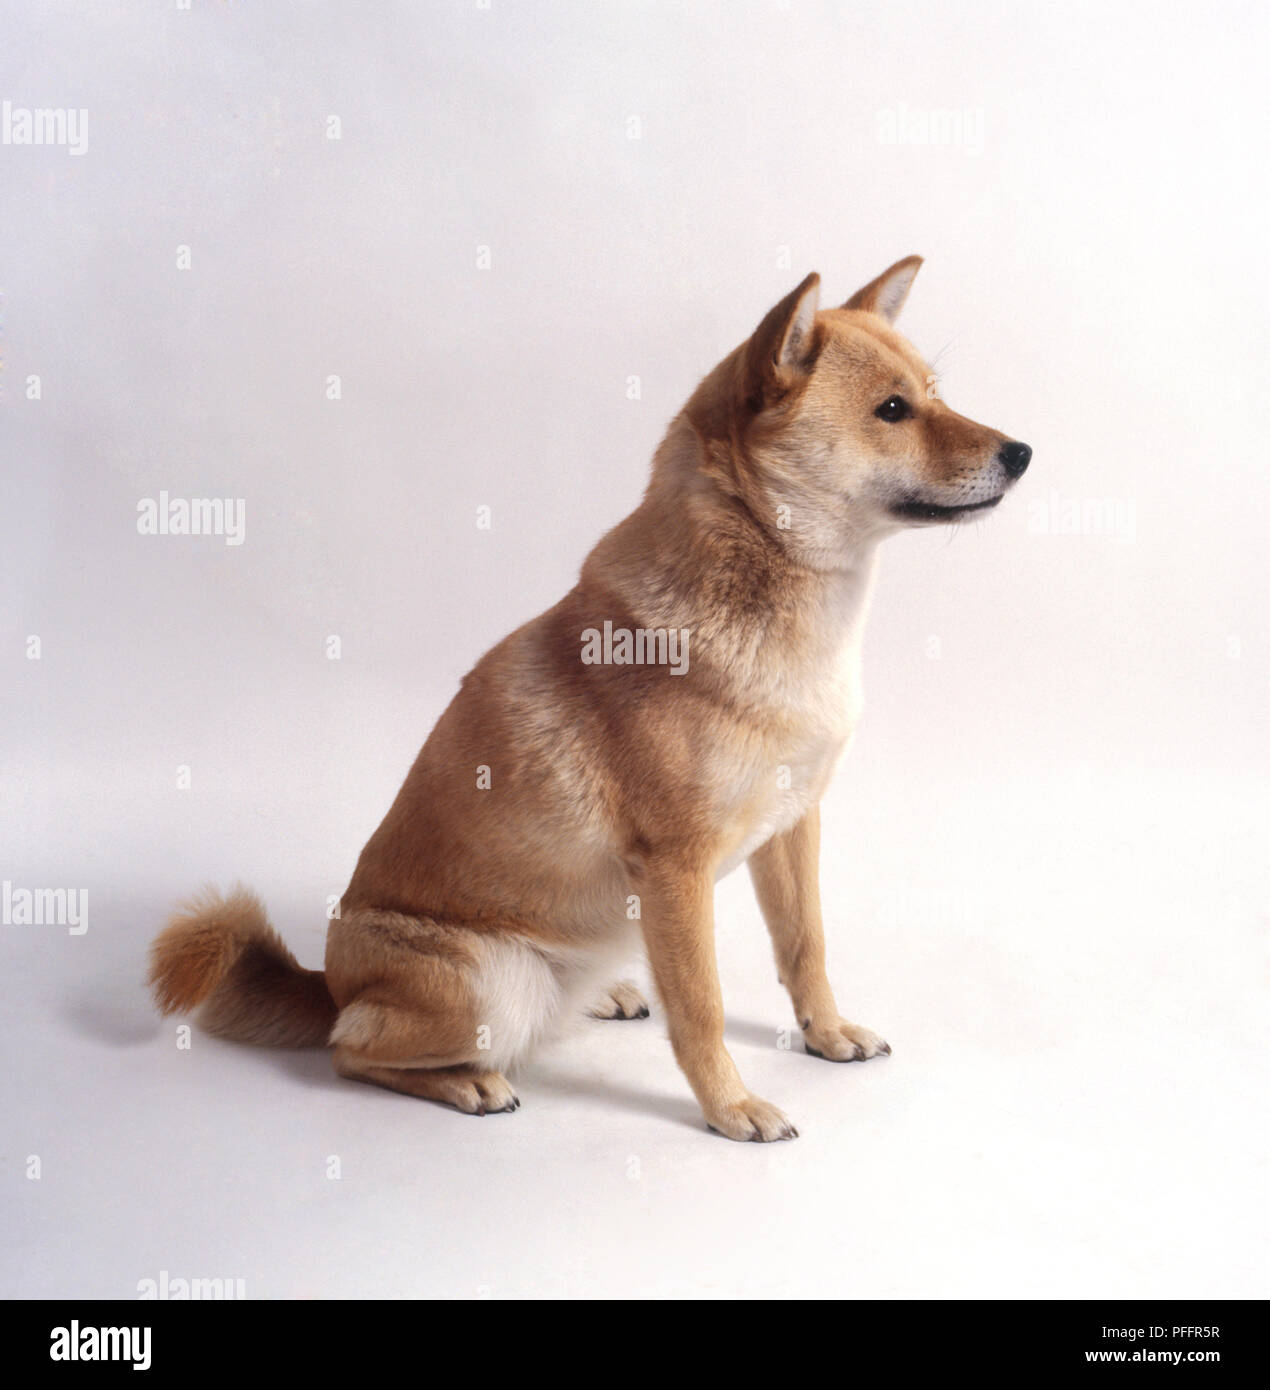 Ainu inu dog, sitting, side view Stock Photo